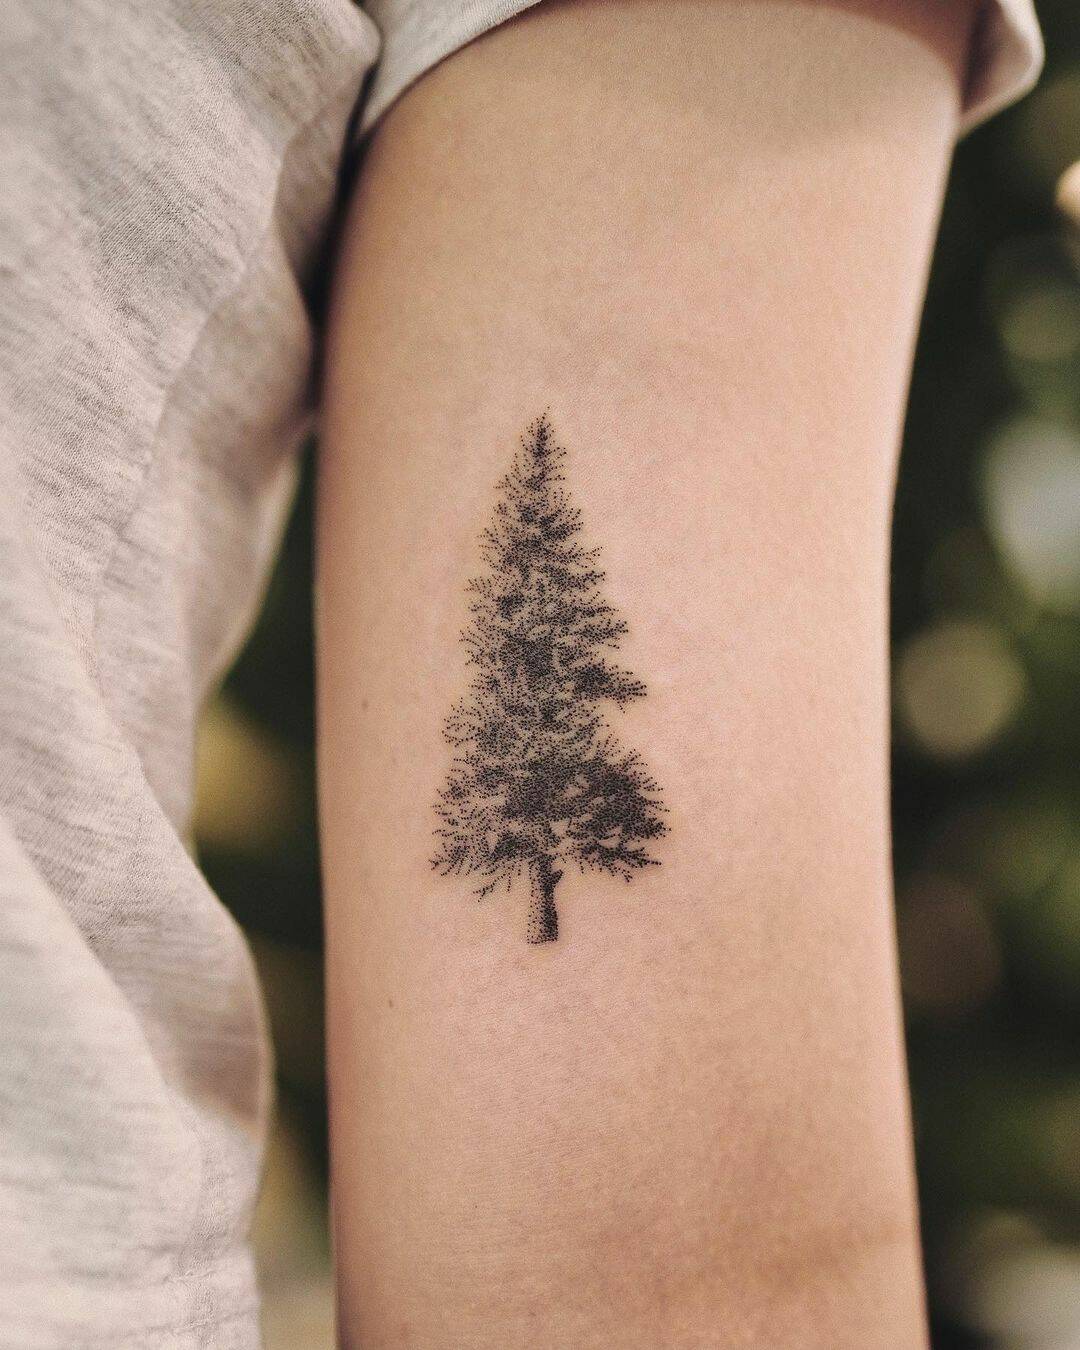 Pine tree tattoo by notemytattoo